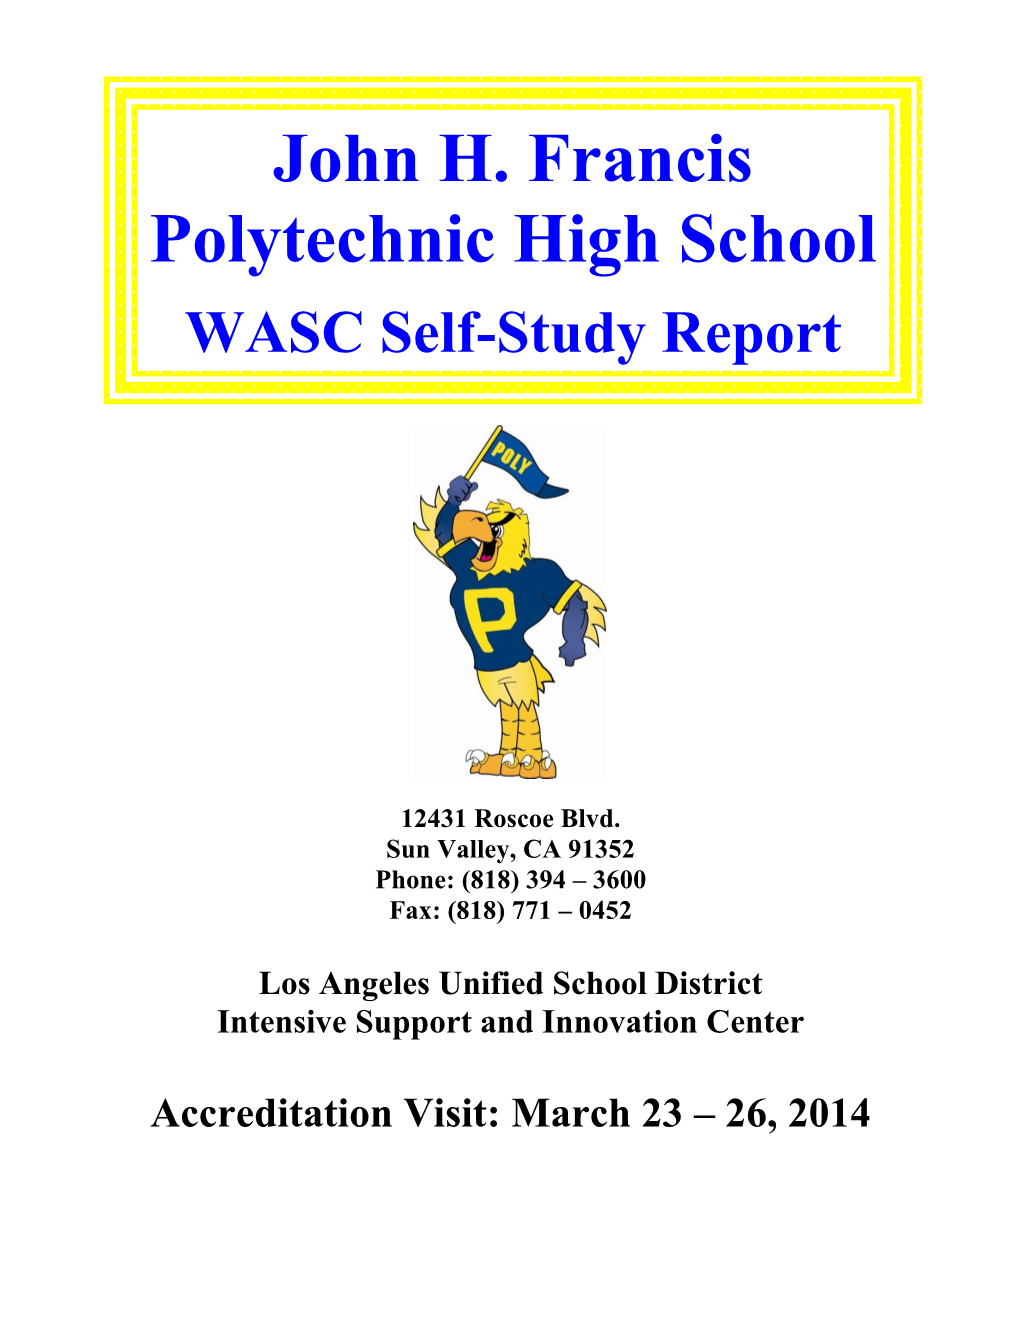 WASC Self-Study Report